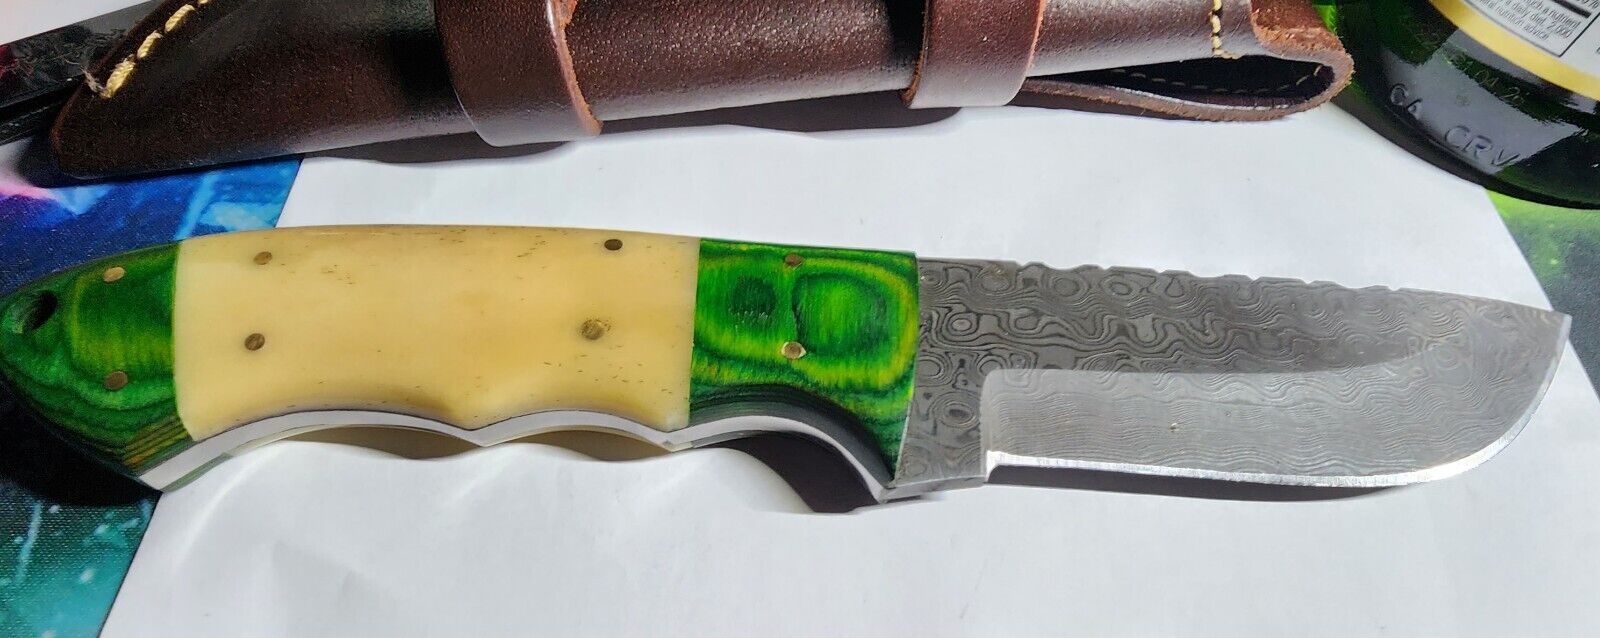 Handmade Large Hunting Knife With DAMASCUS STEEL AND SHEATH *VERY Sharp*